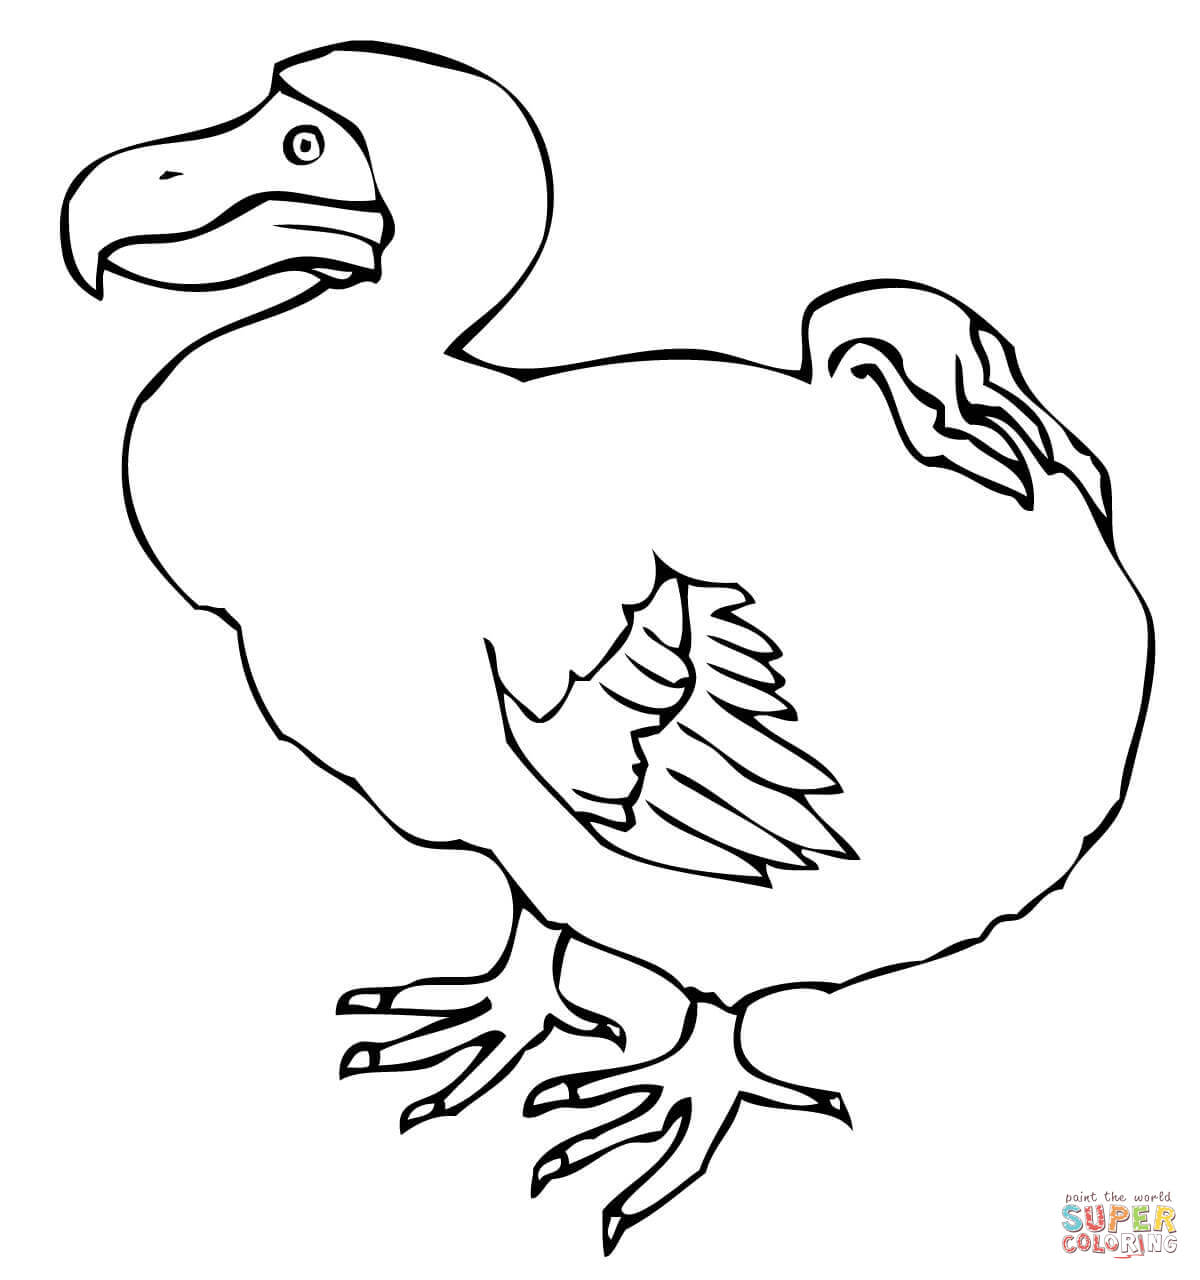 Dodo coloring, Download Dodo coloring for free 2019